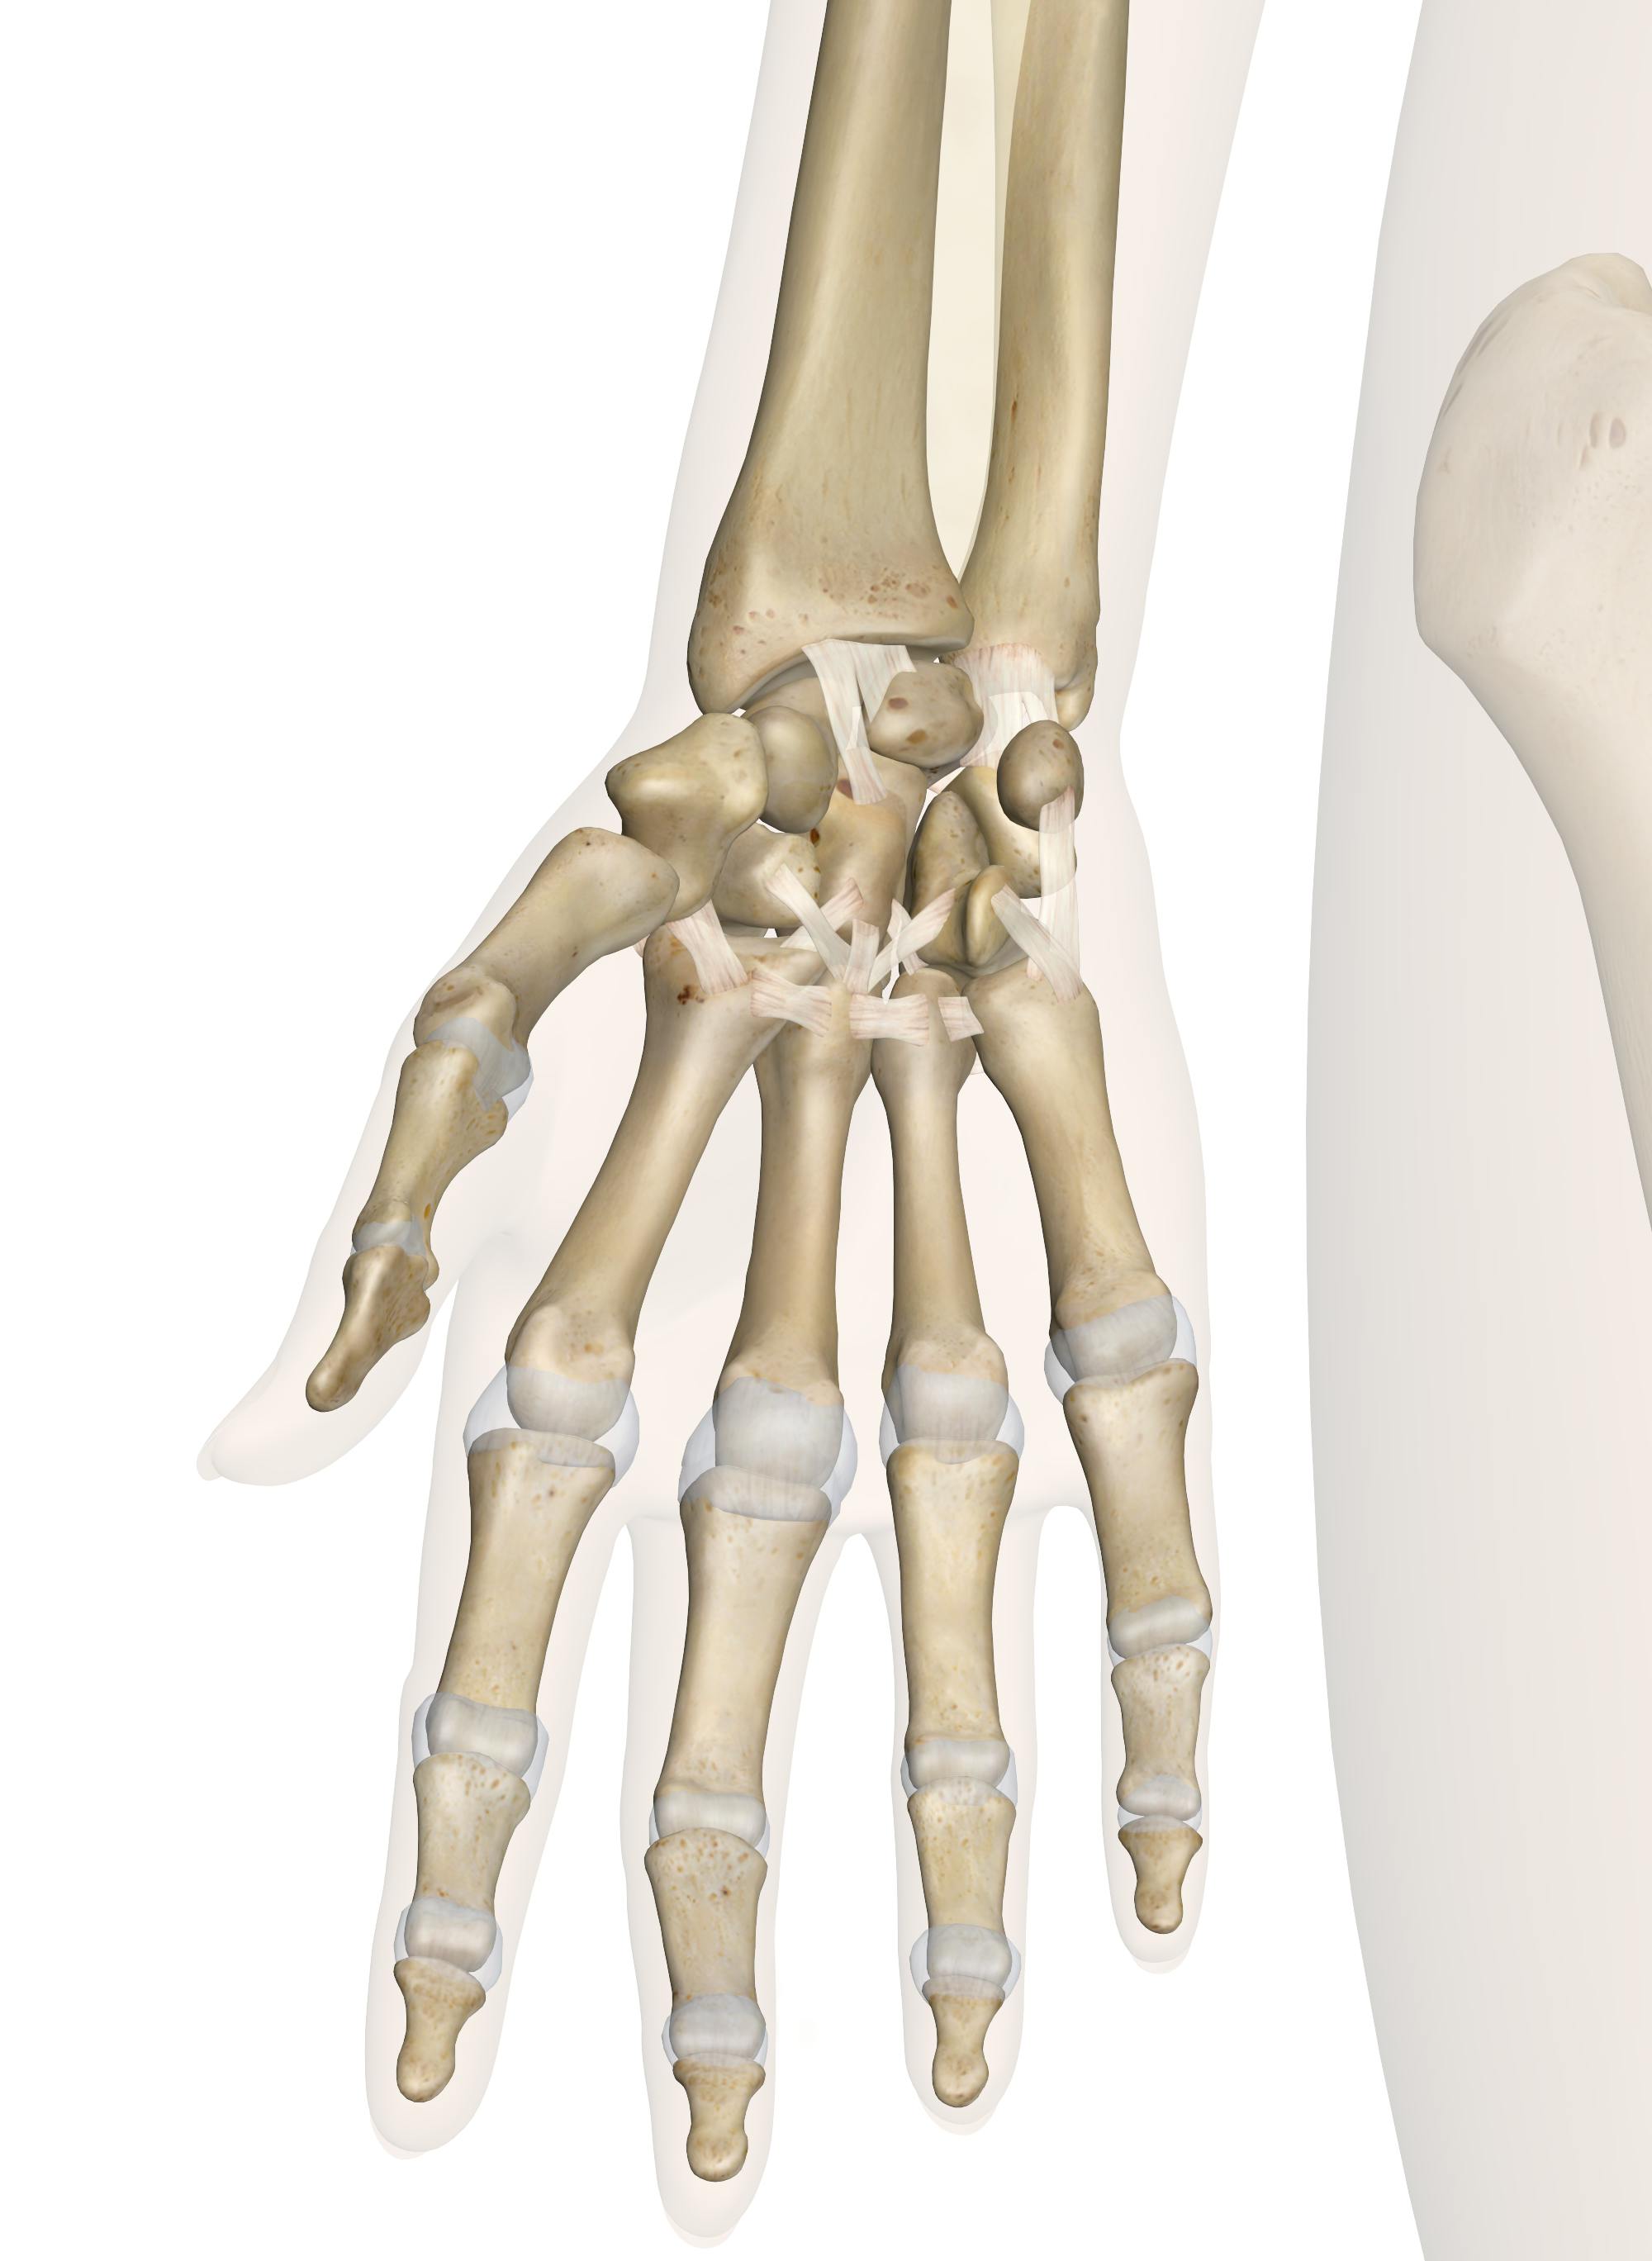 skeleton hand anatomy side view